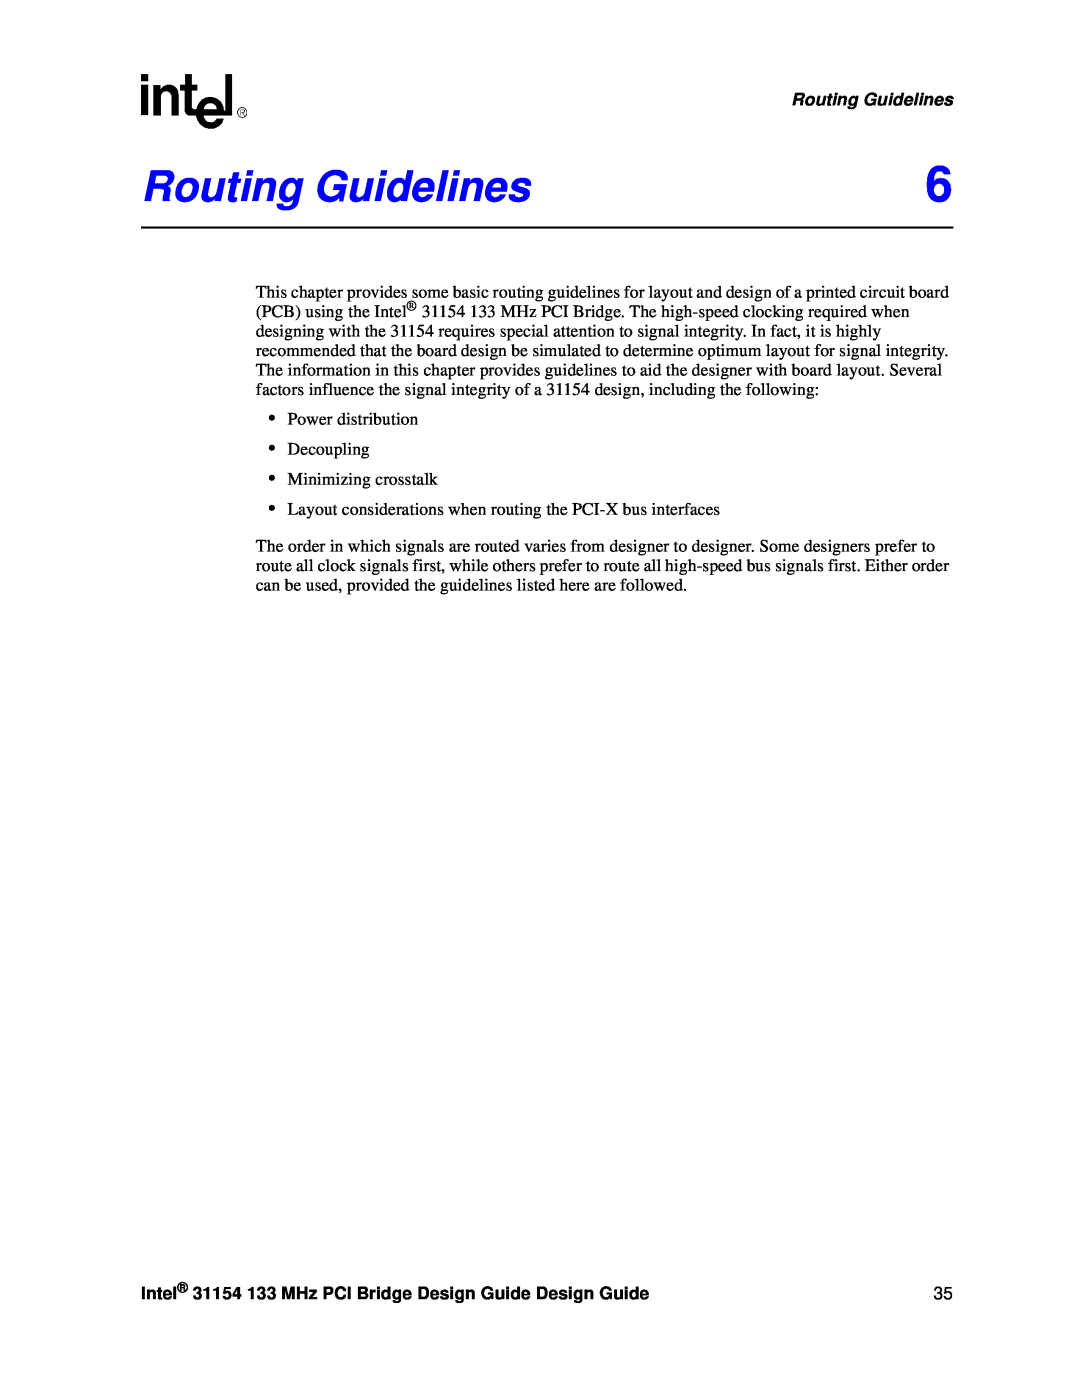 Intel manual Routing Guidelines, Intel 31154 133 MHz PCI Bridge Design Guide Design Guide 